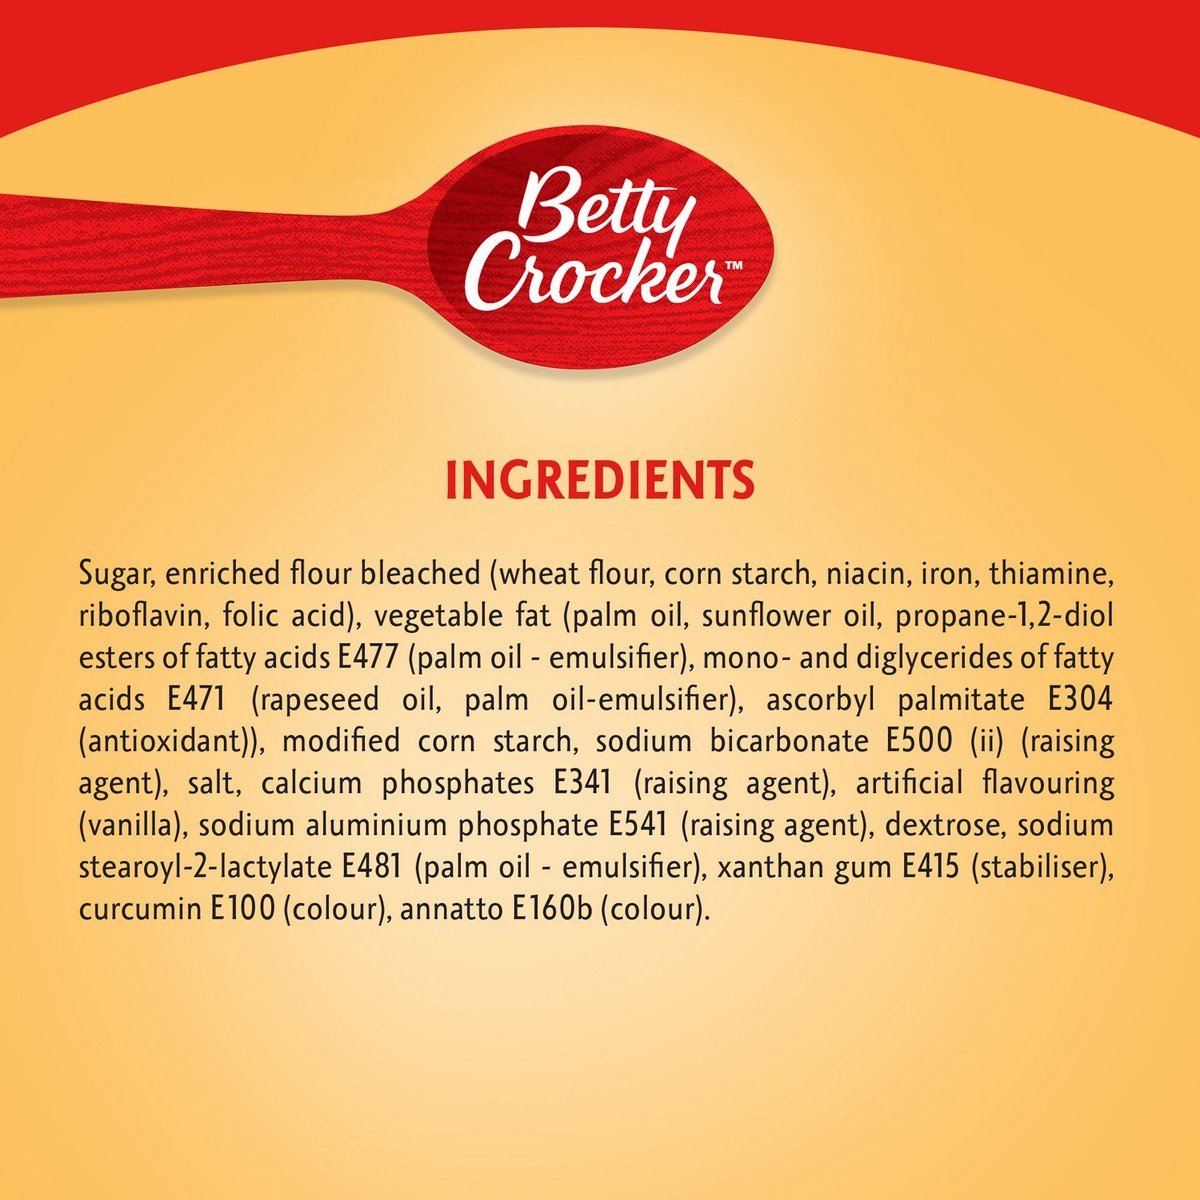 Betty Crocker Super Moist Cake Mix Yellow 500g